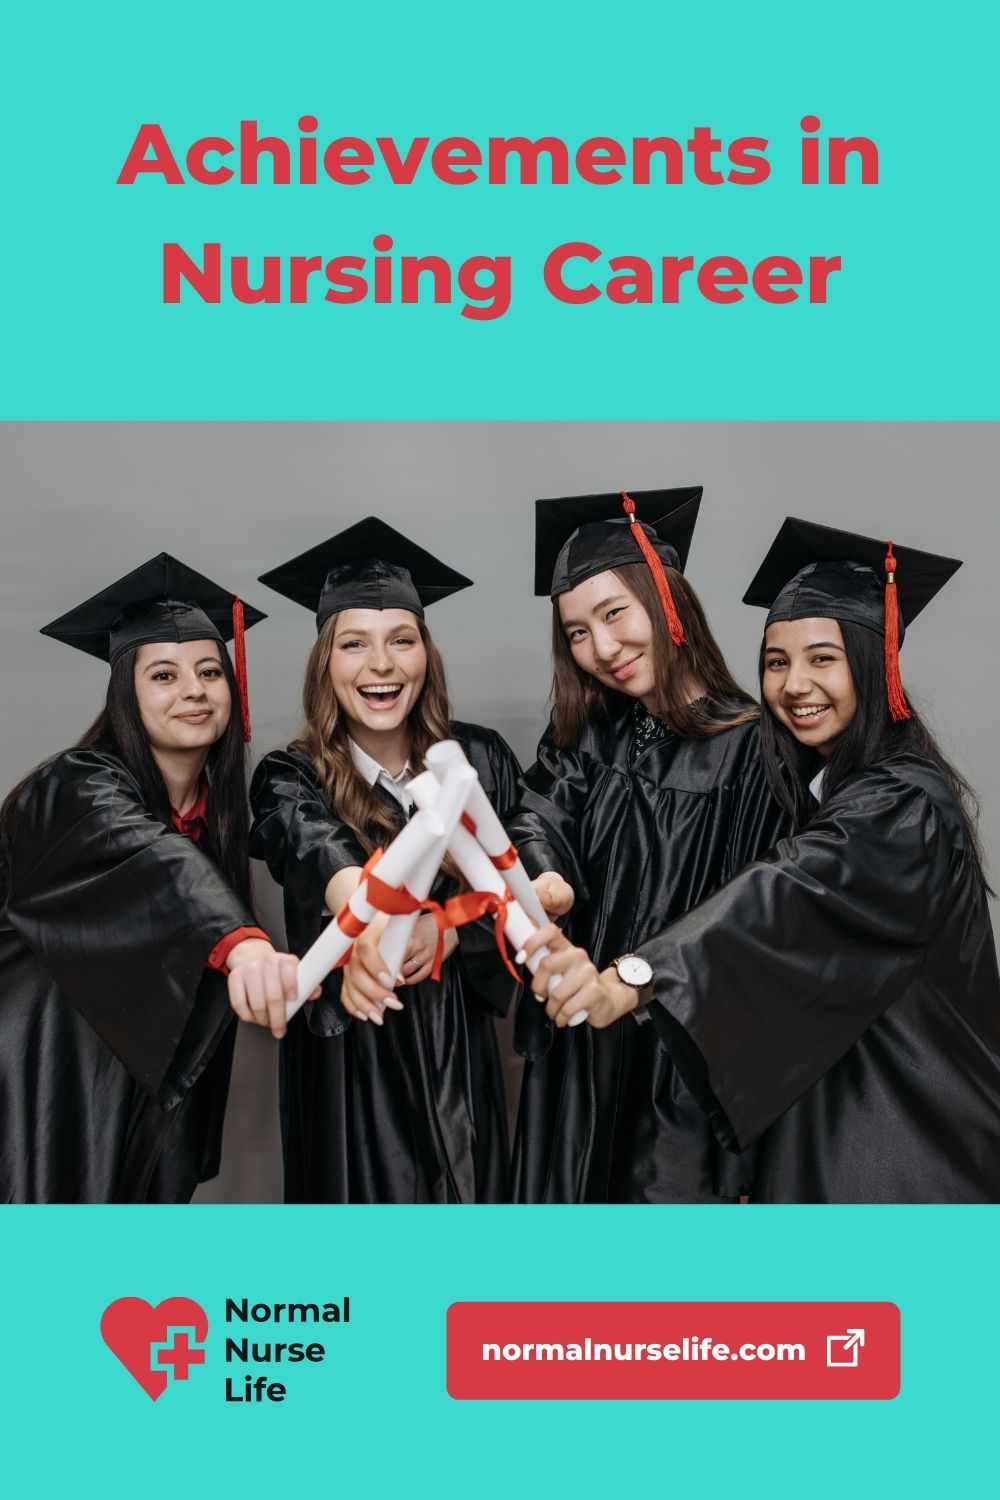 Achievements in a nursing career